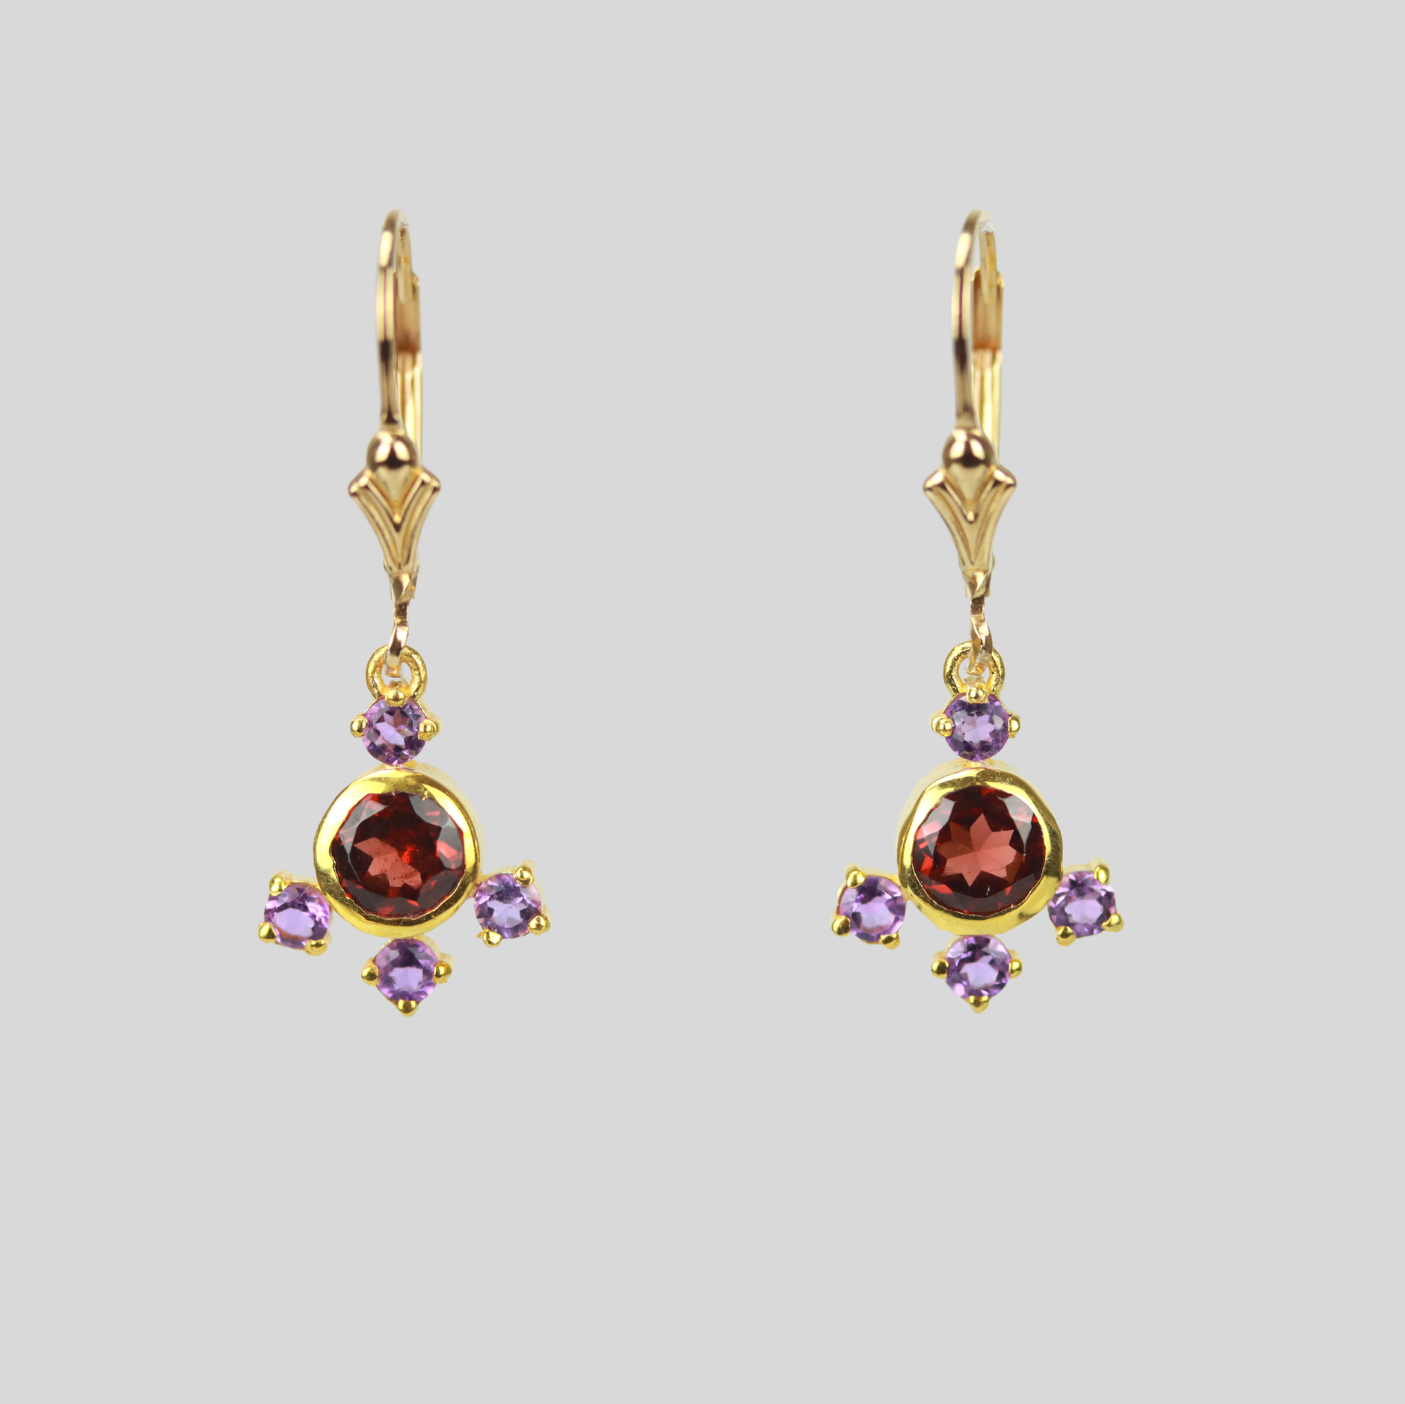 Multi gemstone chandelier earrings in garnet and amethyst